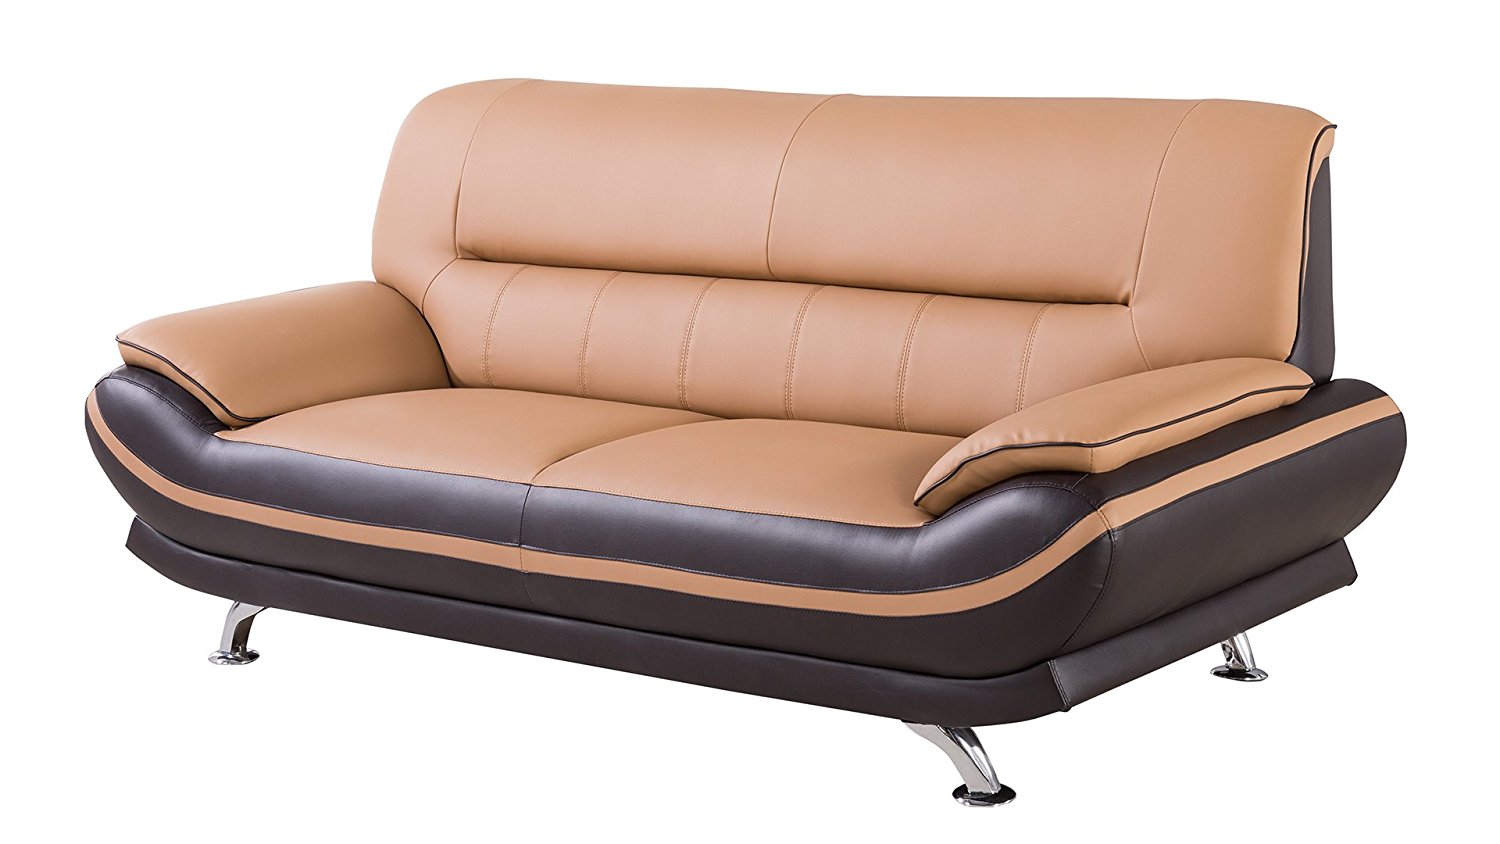 American Eagle Furniture Upholstered Leather Sofa Decor